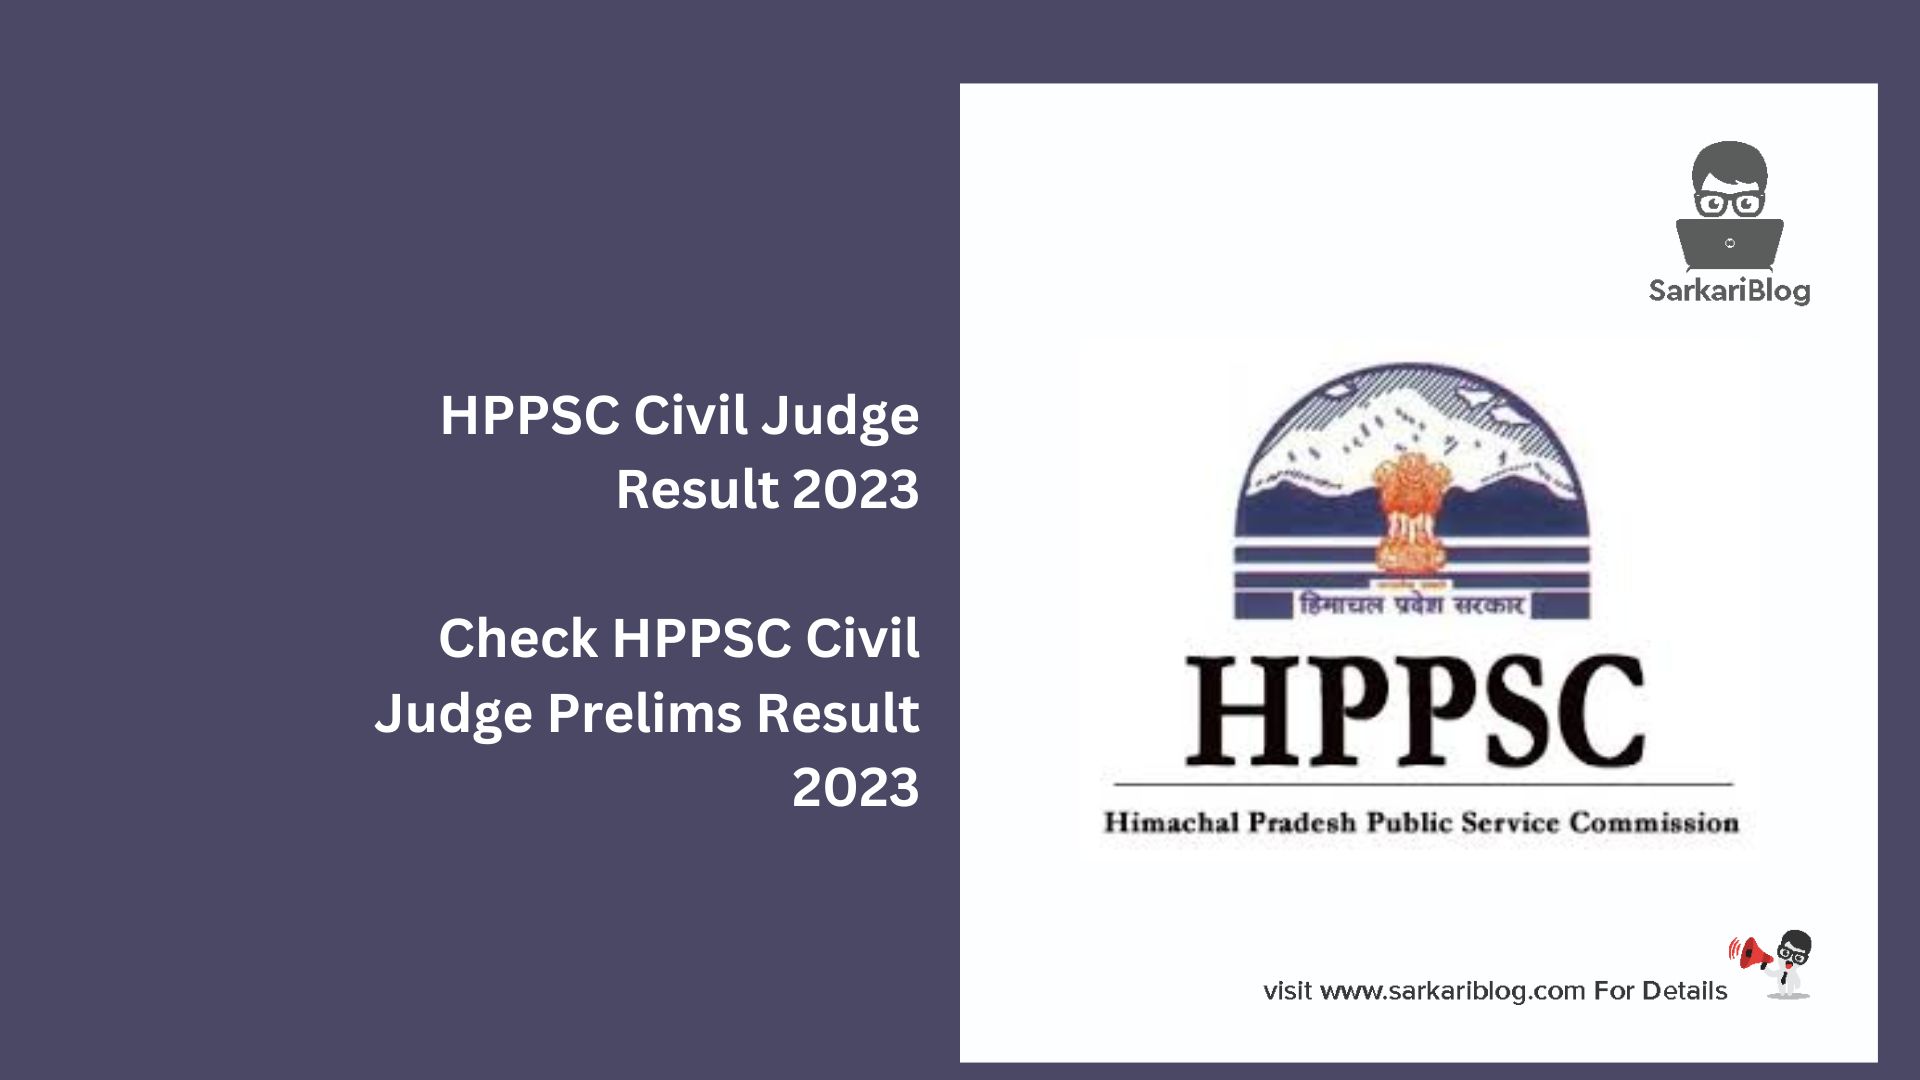 HPPSC Civil Judge Result 2023